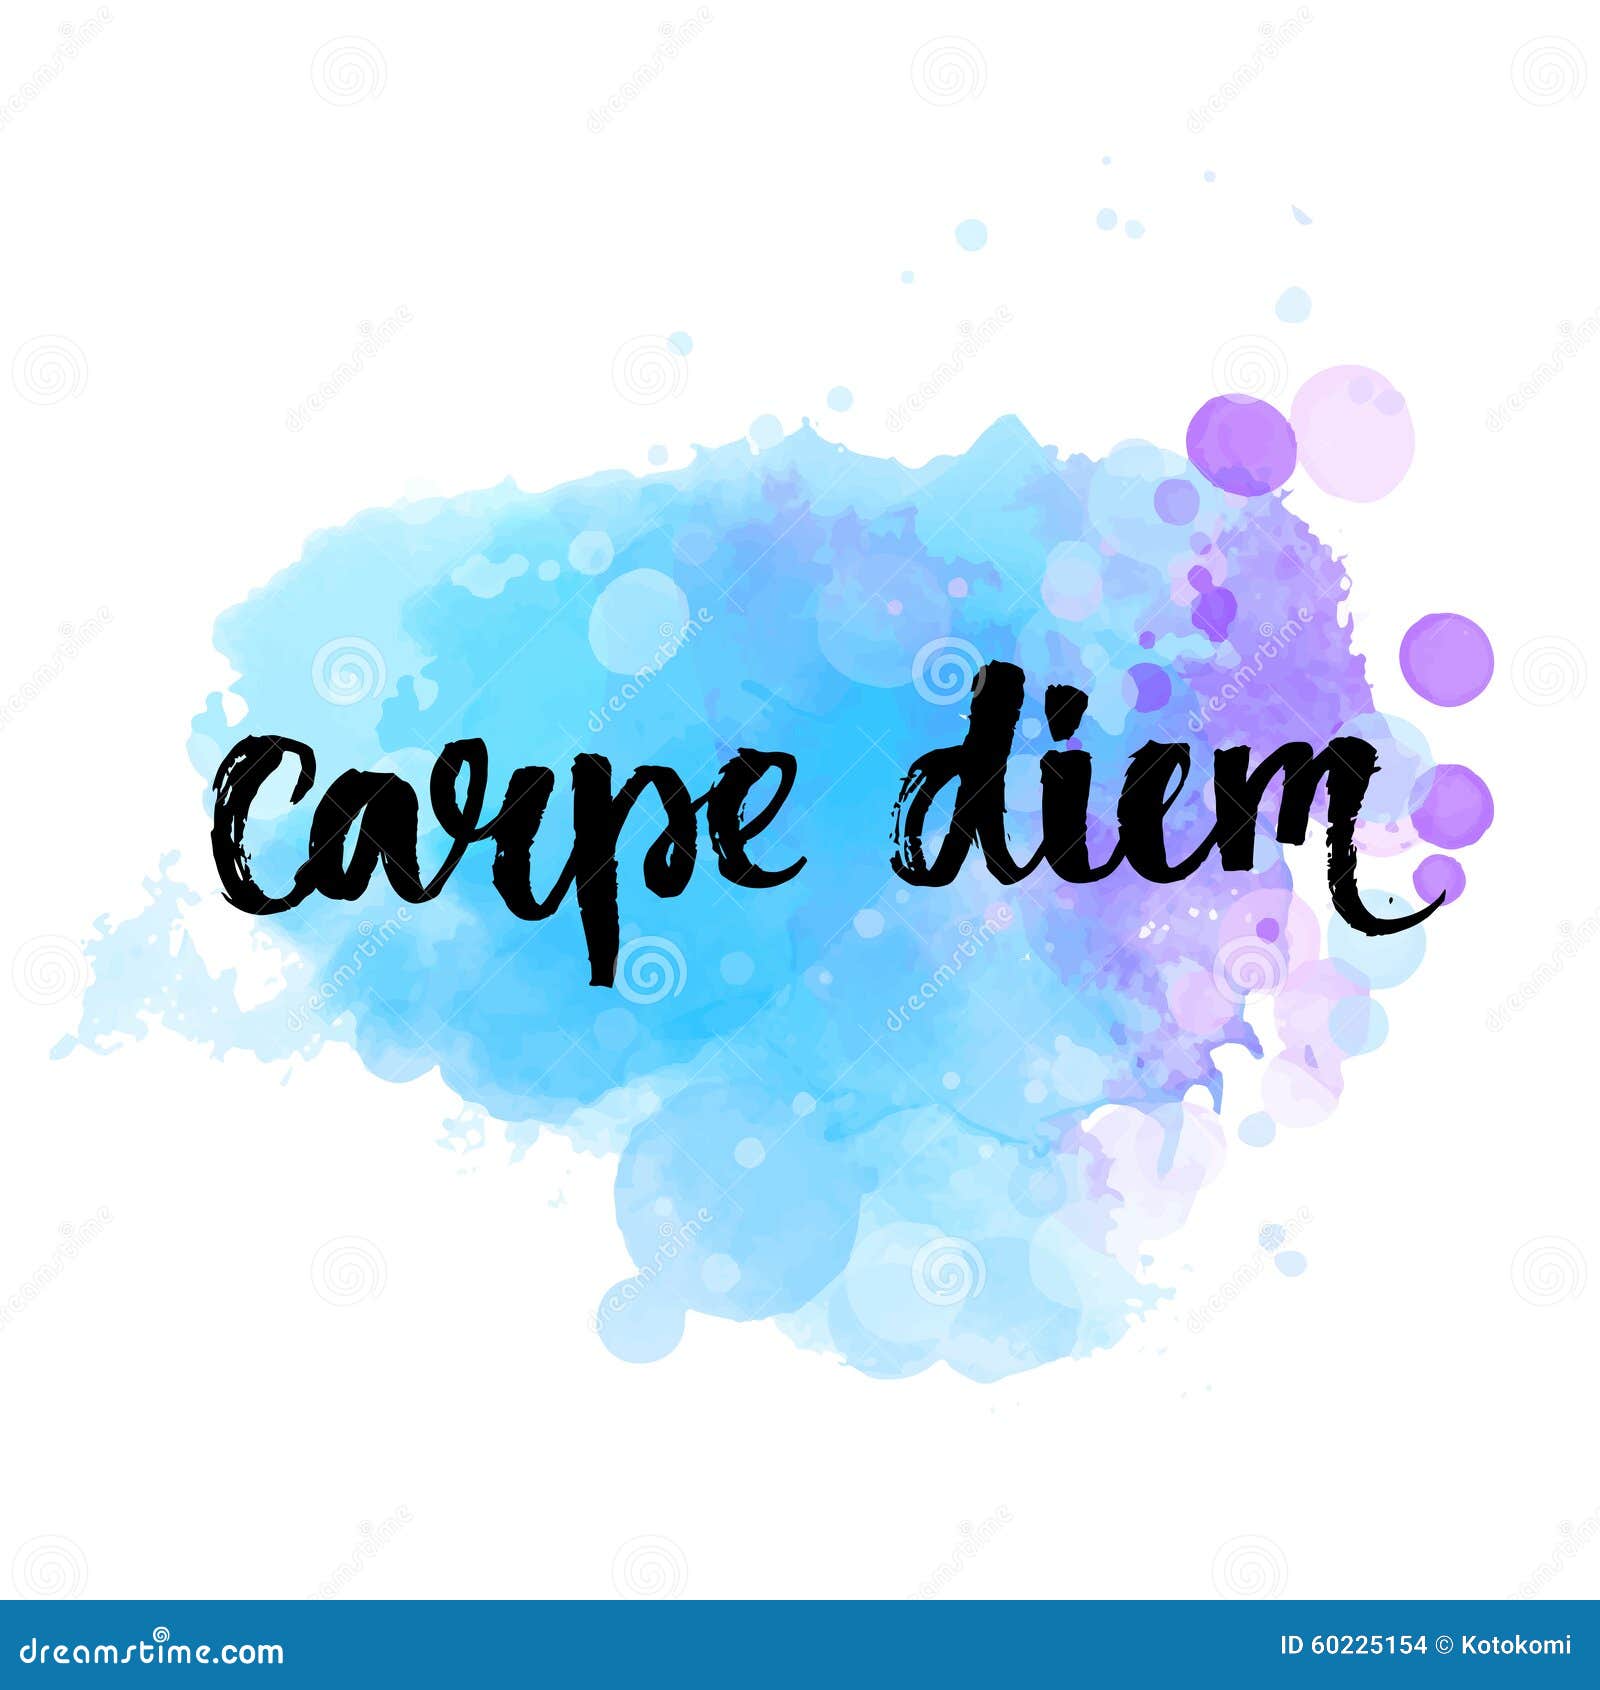 Carpe Diem - Latin Phrase Means Seize the Day Stock Vector